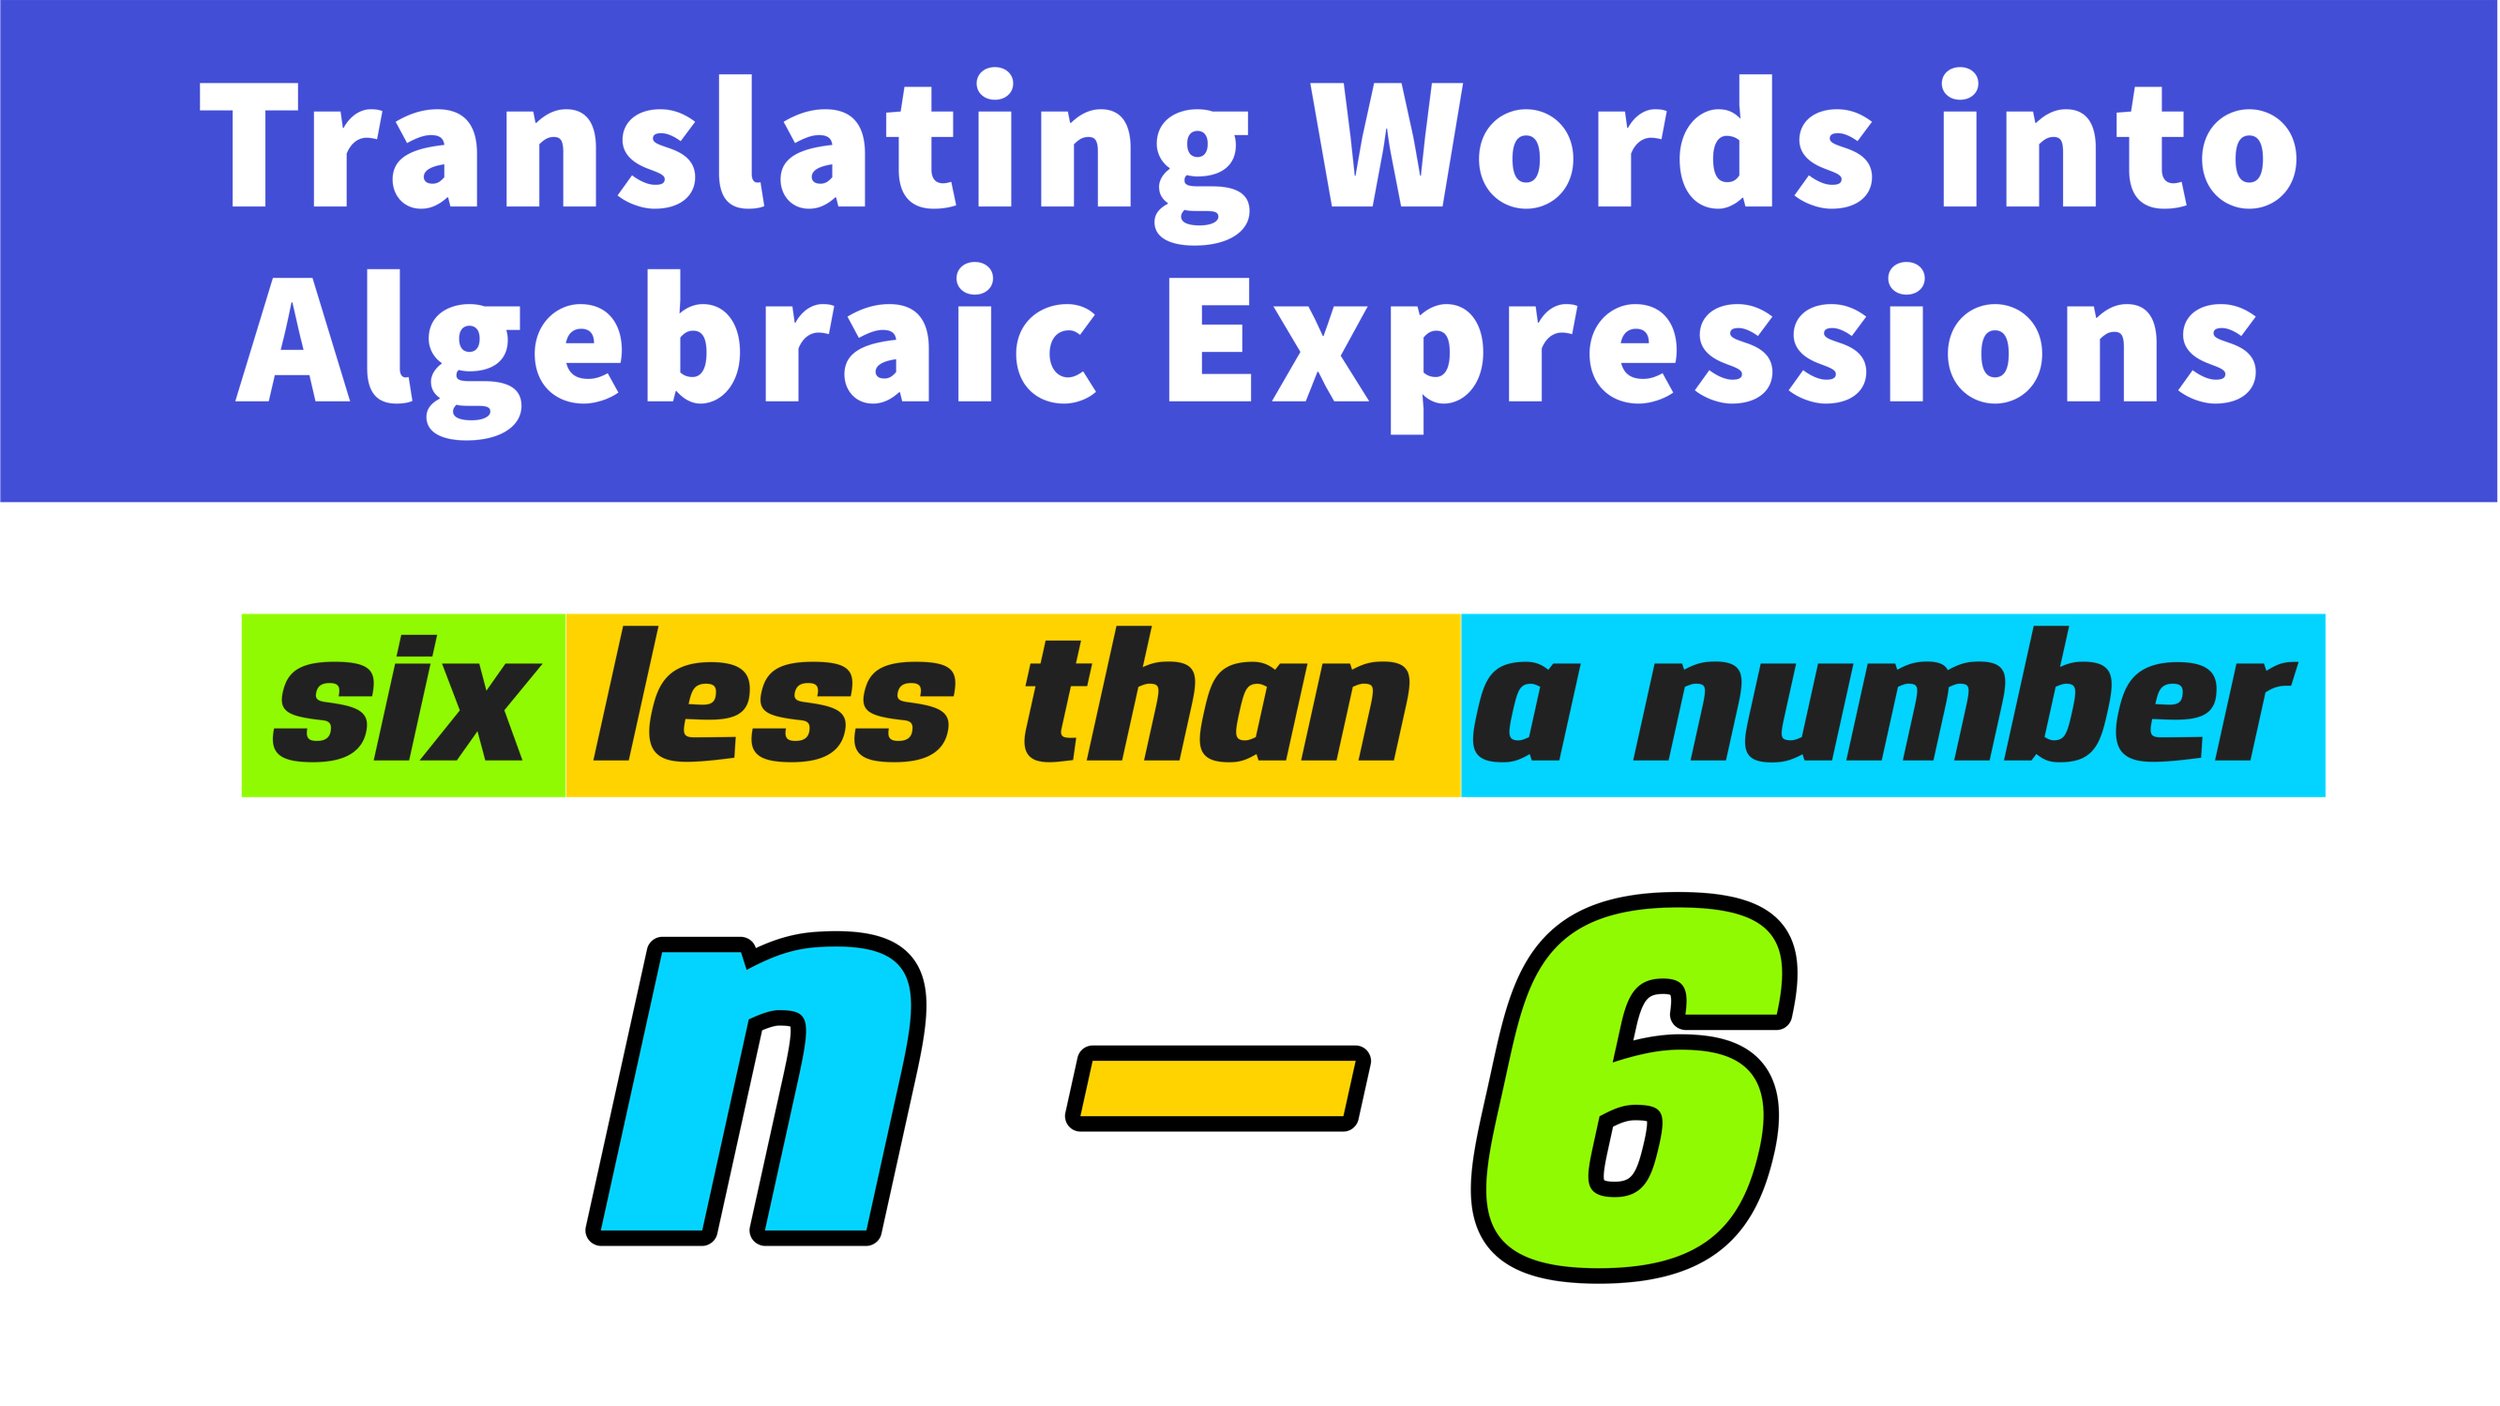 translating-words-into-algebraic-expressions-free-guide-mashup-math